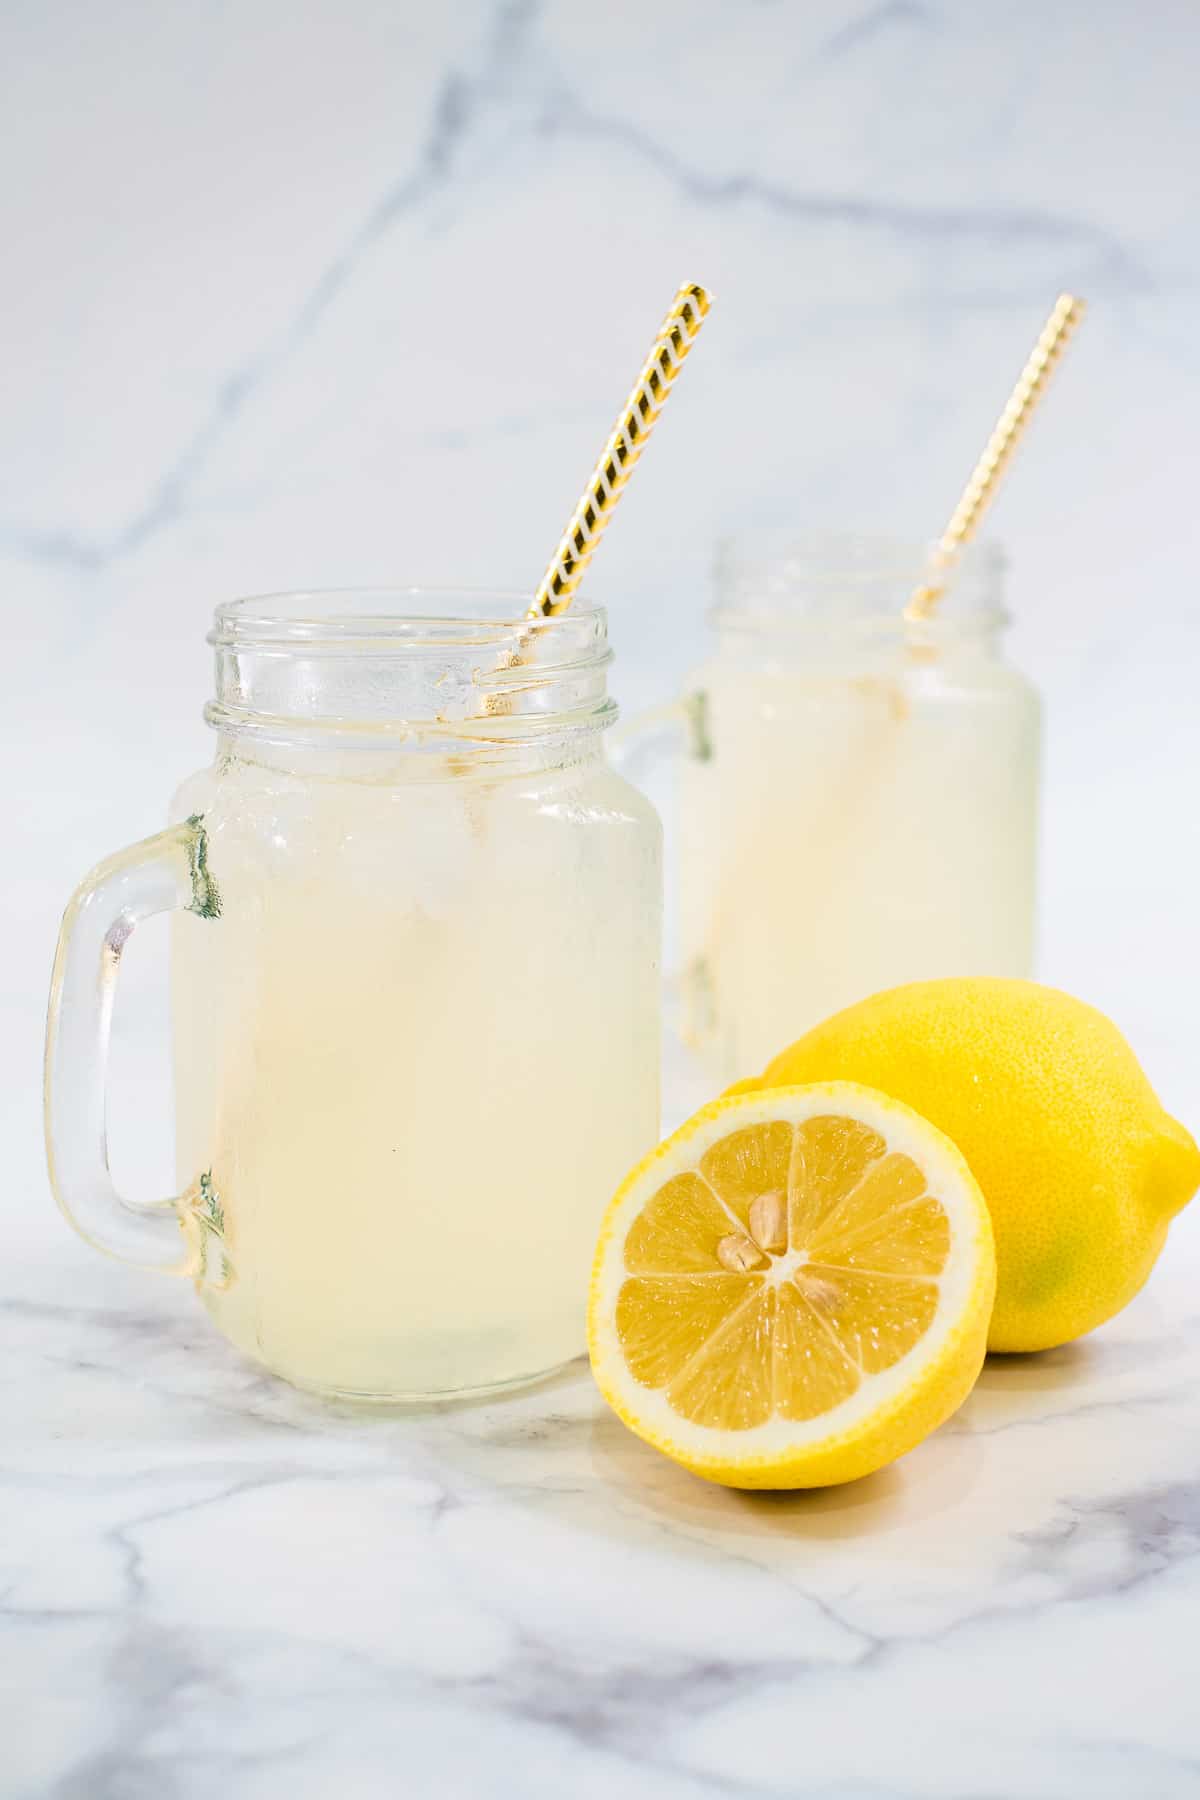 2 glasses of lemonade with straw it them.